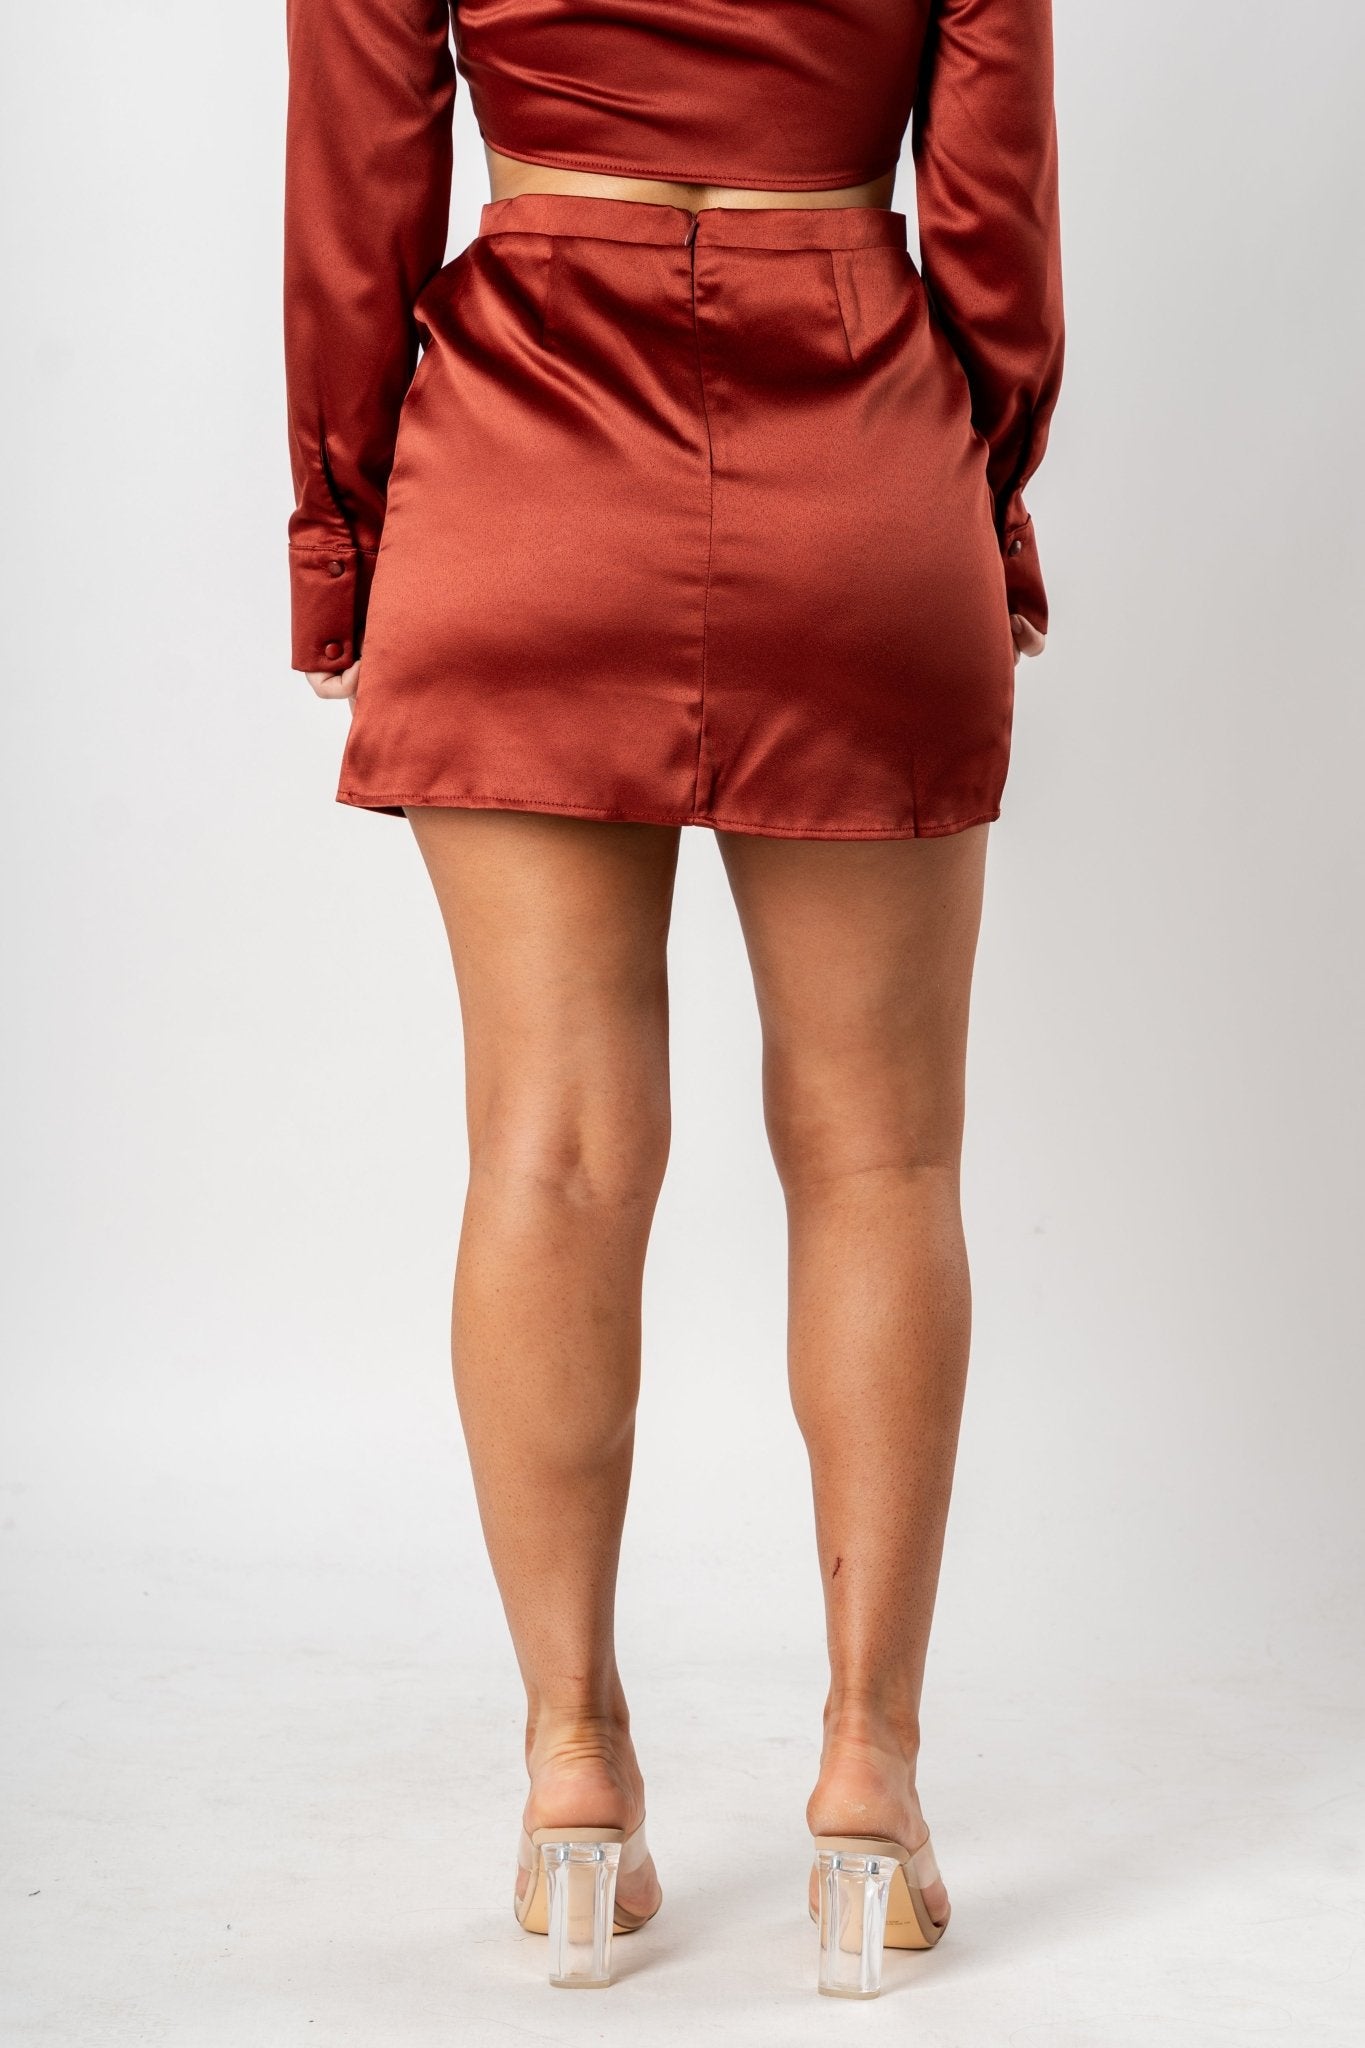 Mini skirt with slit cognac | Lush Fashion Lounge: boutique fashion skirts, affordable boutique skirts, cute affordable skirts